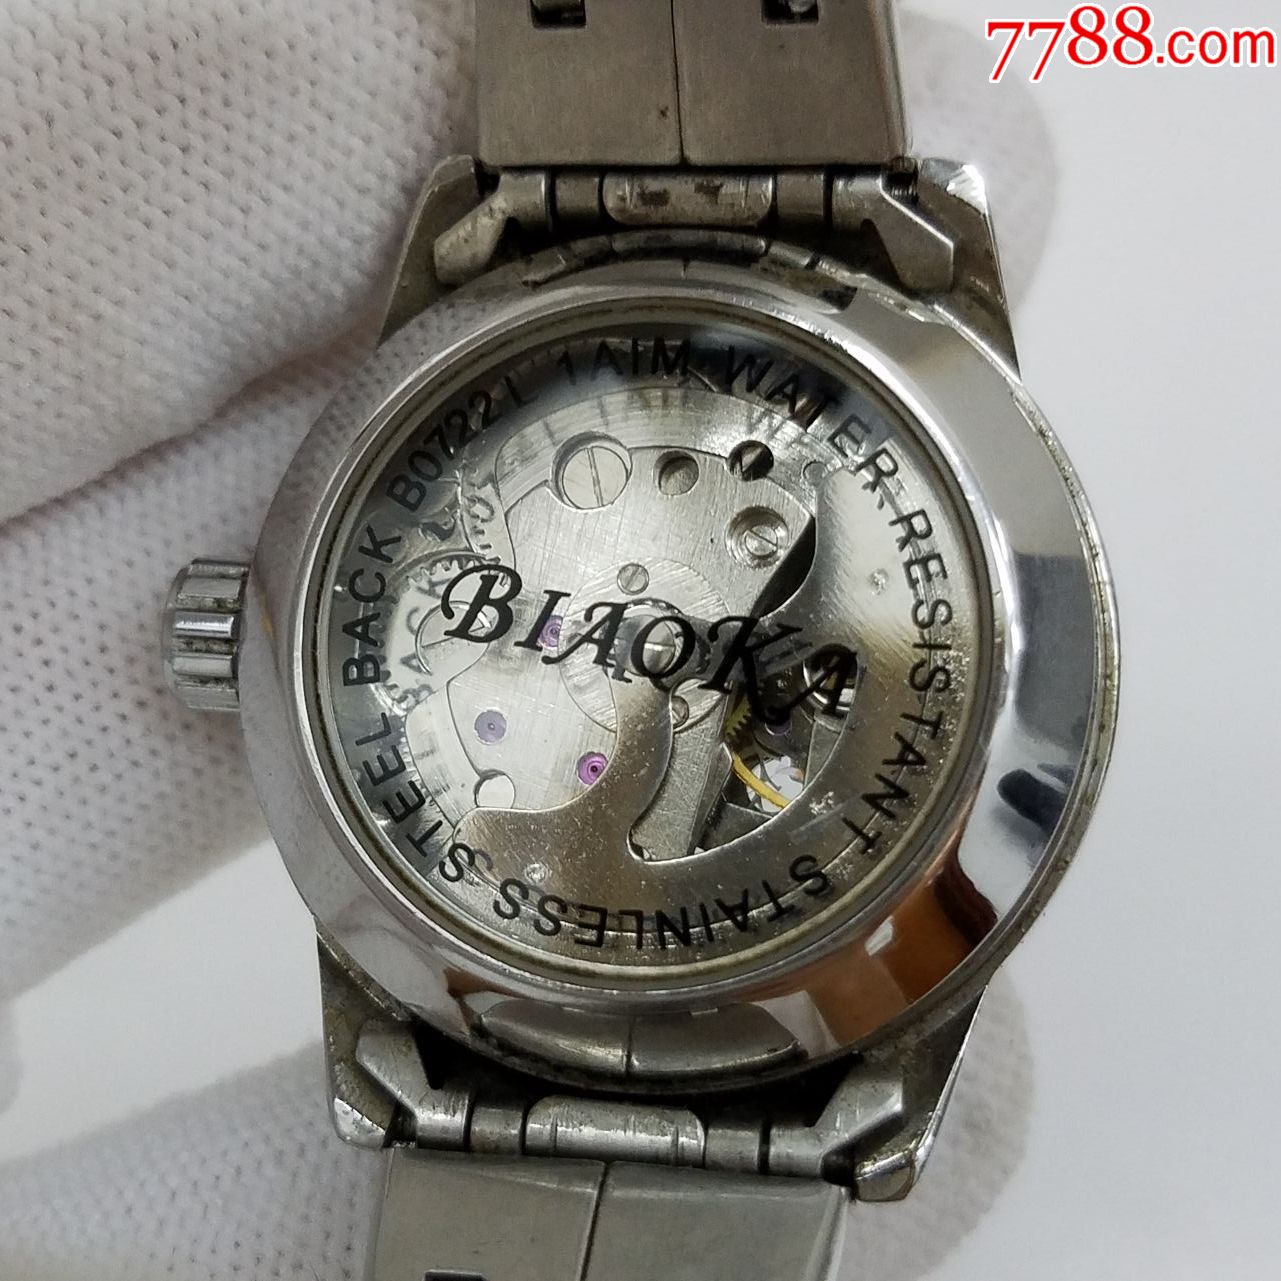 biaoka手表图片及价格图片